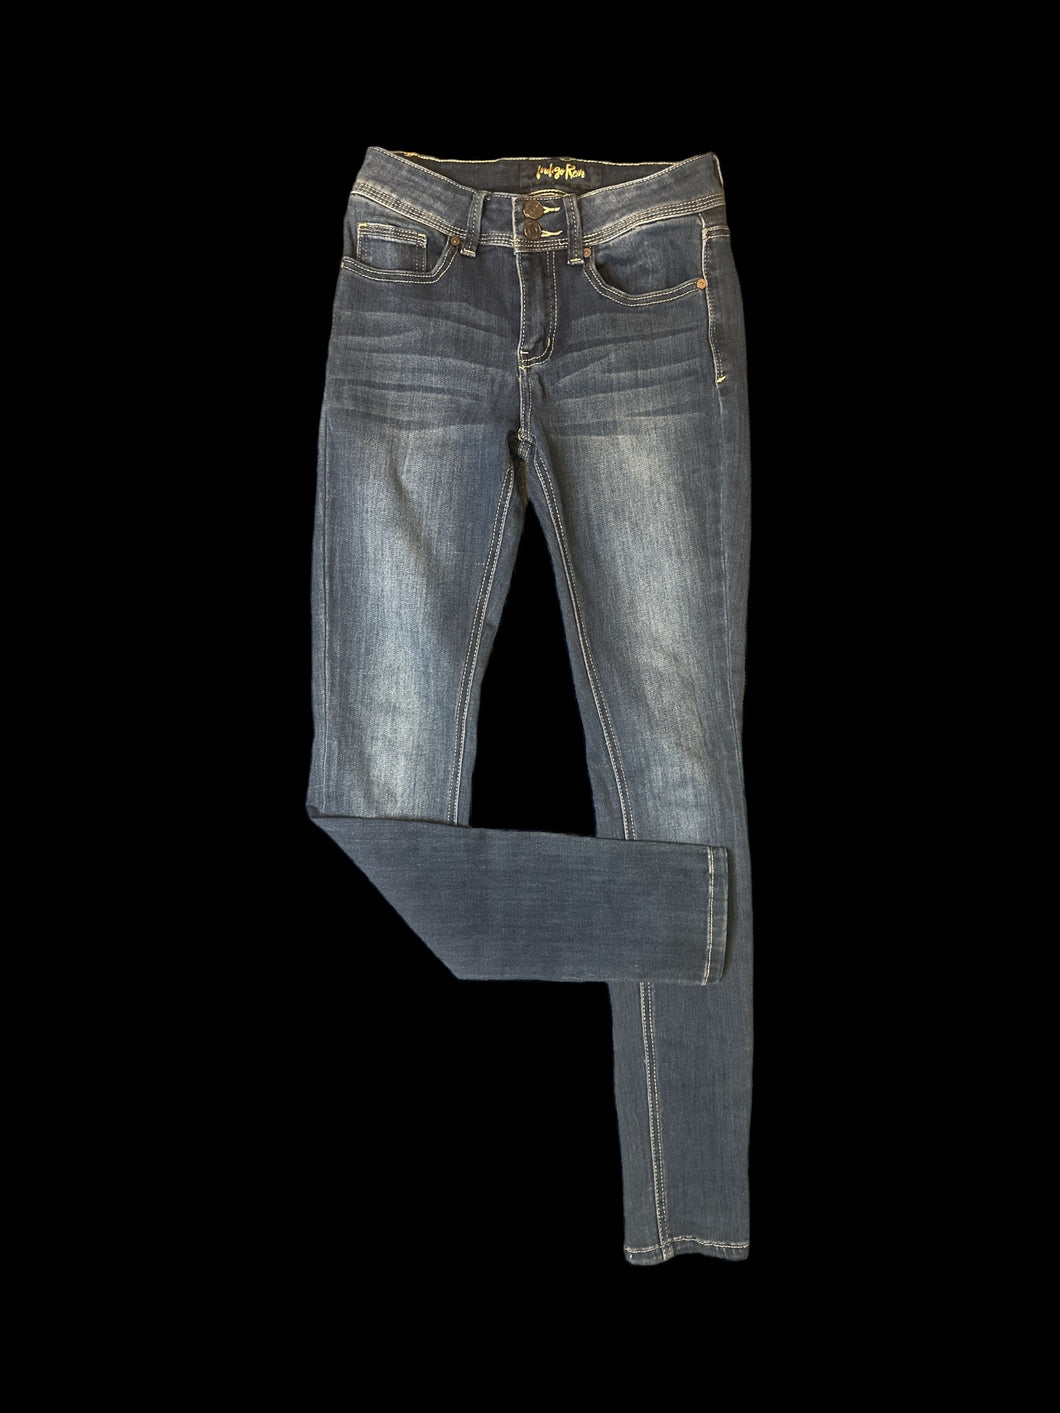 XXS Dark blue denim jeans w/ light yellow stitching, lighter wash on front of legs, pockets, belt loops, & double button/zipper closure